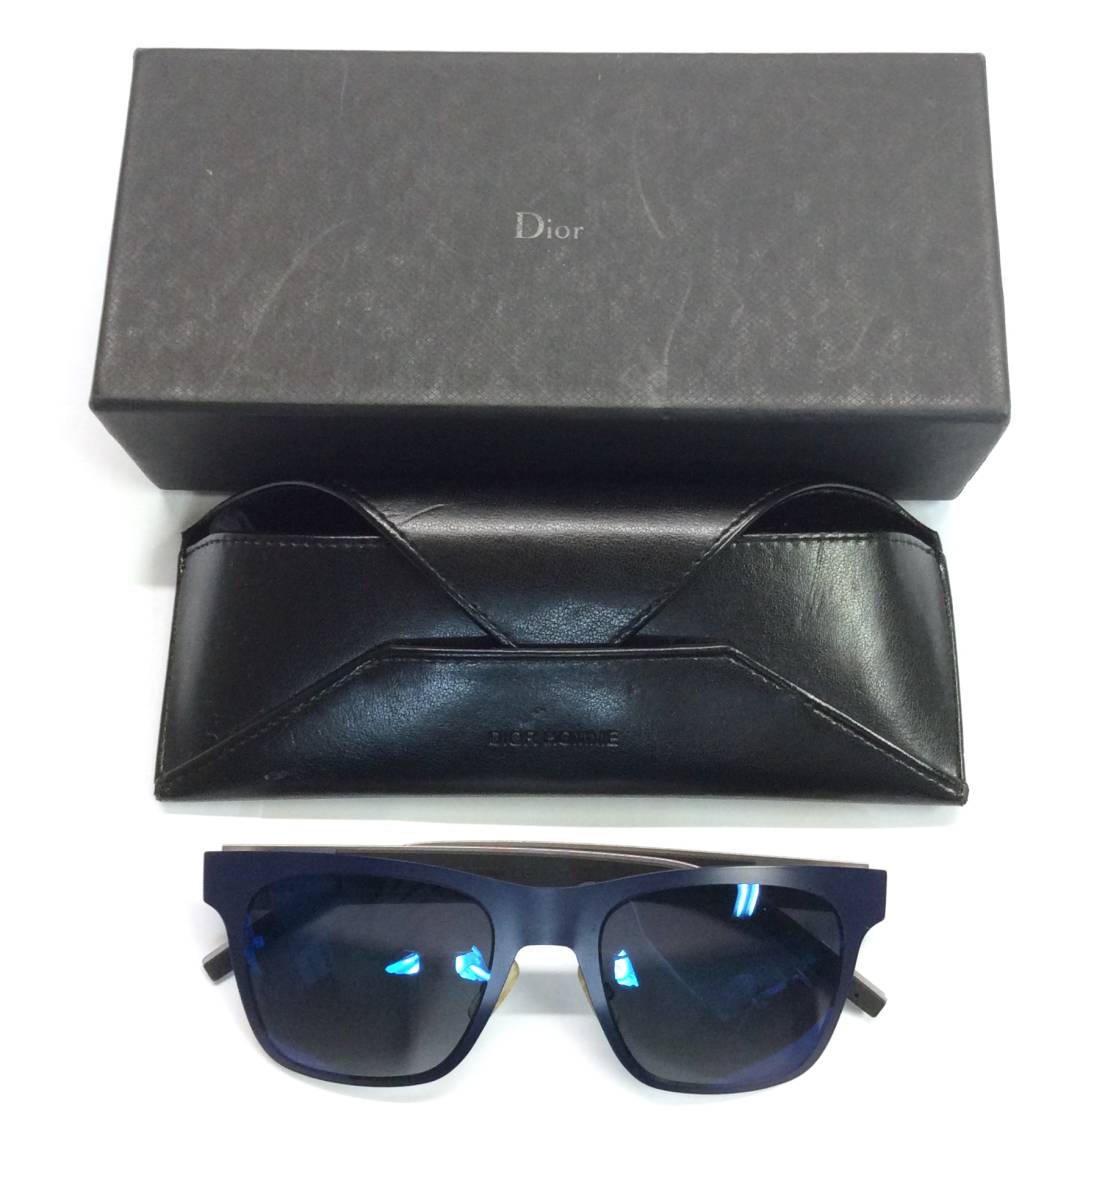 Dior Men's Sunglasses | Proxy bidding and ordering service for